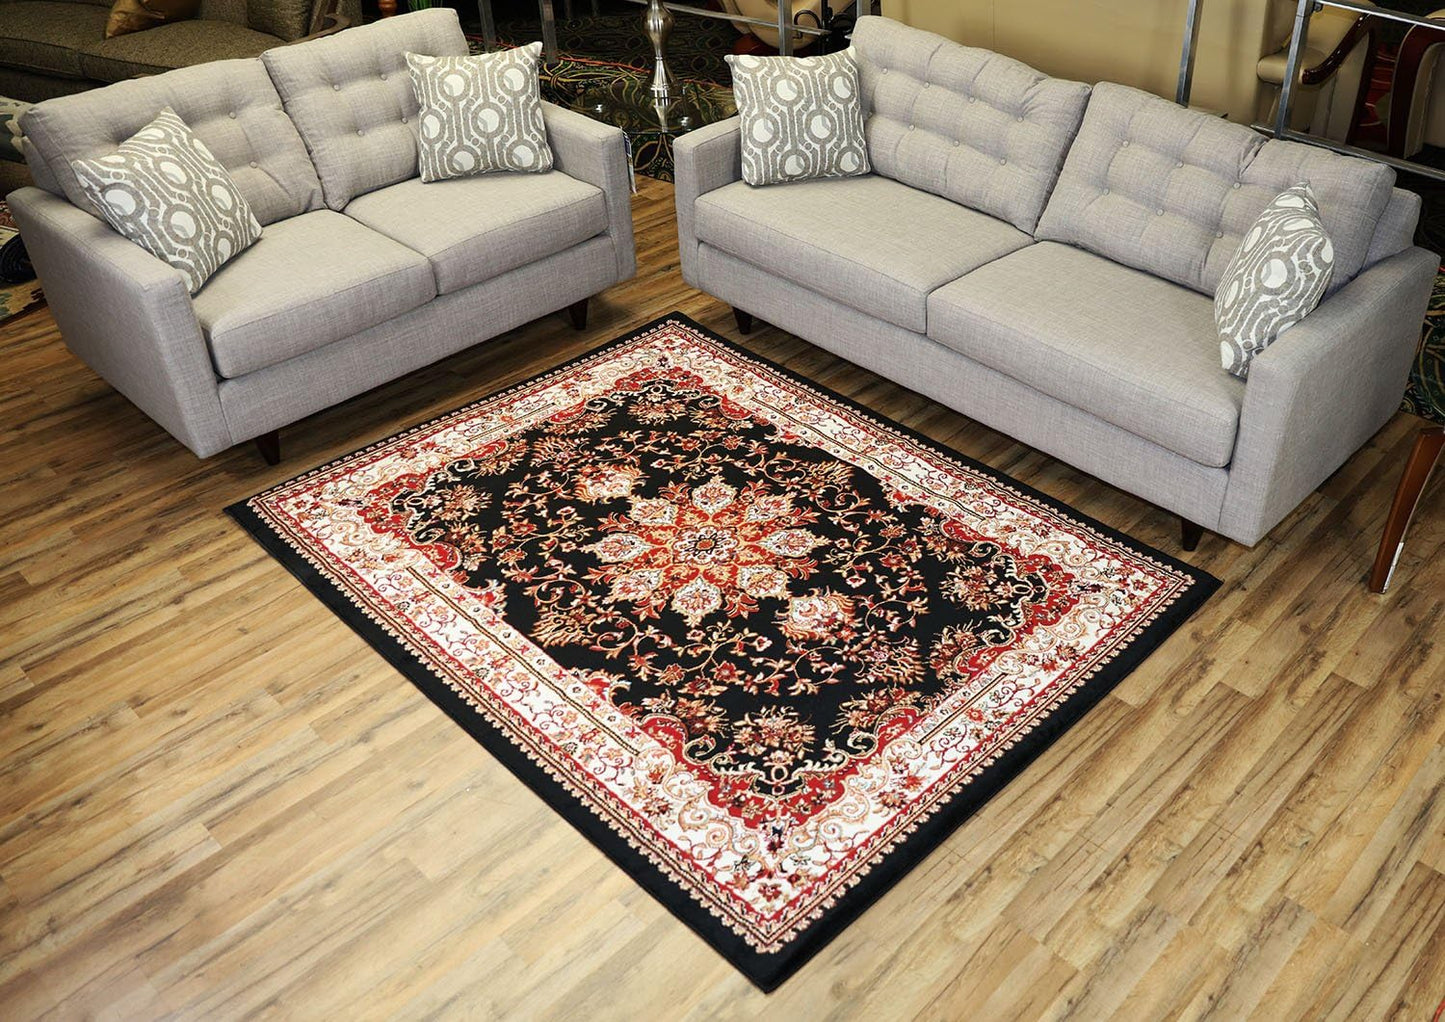 Nevita Collection Isfahan Persian Traditional Design Area Rug  (Black, 5' 3" x 7' 1")